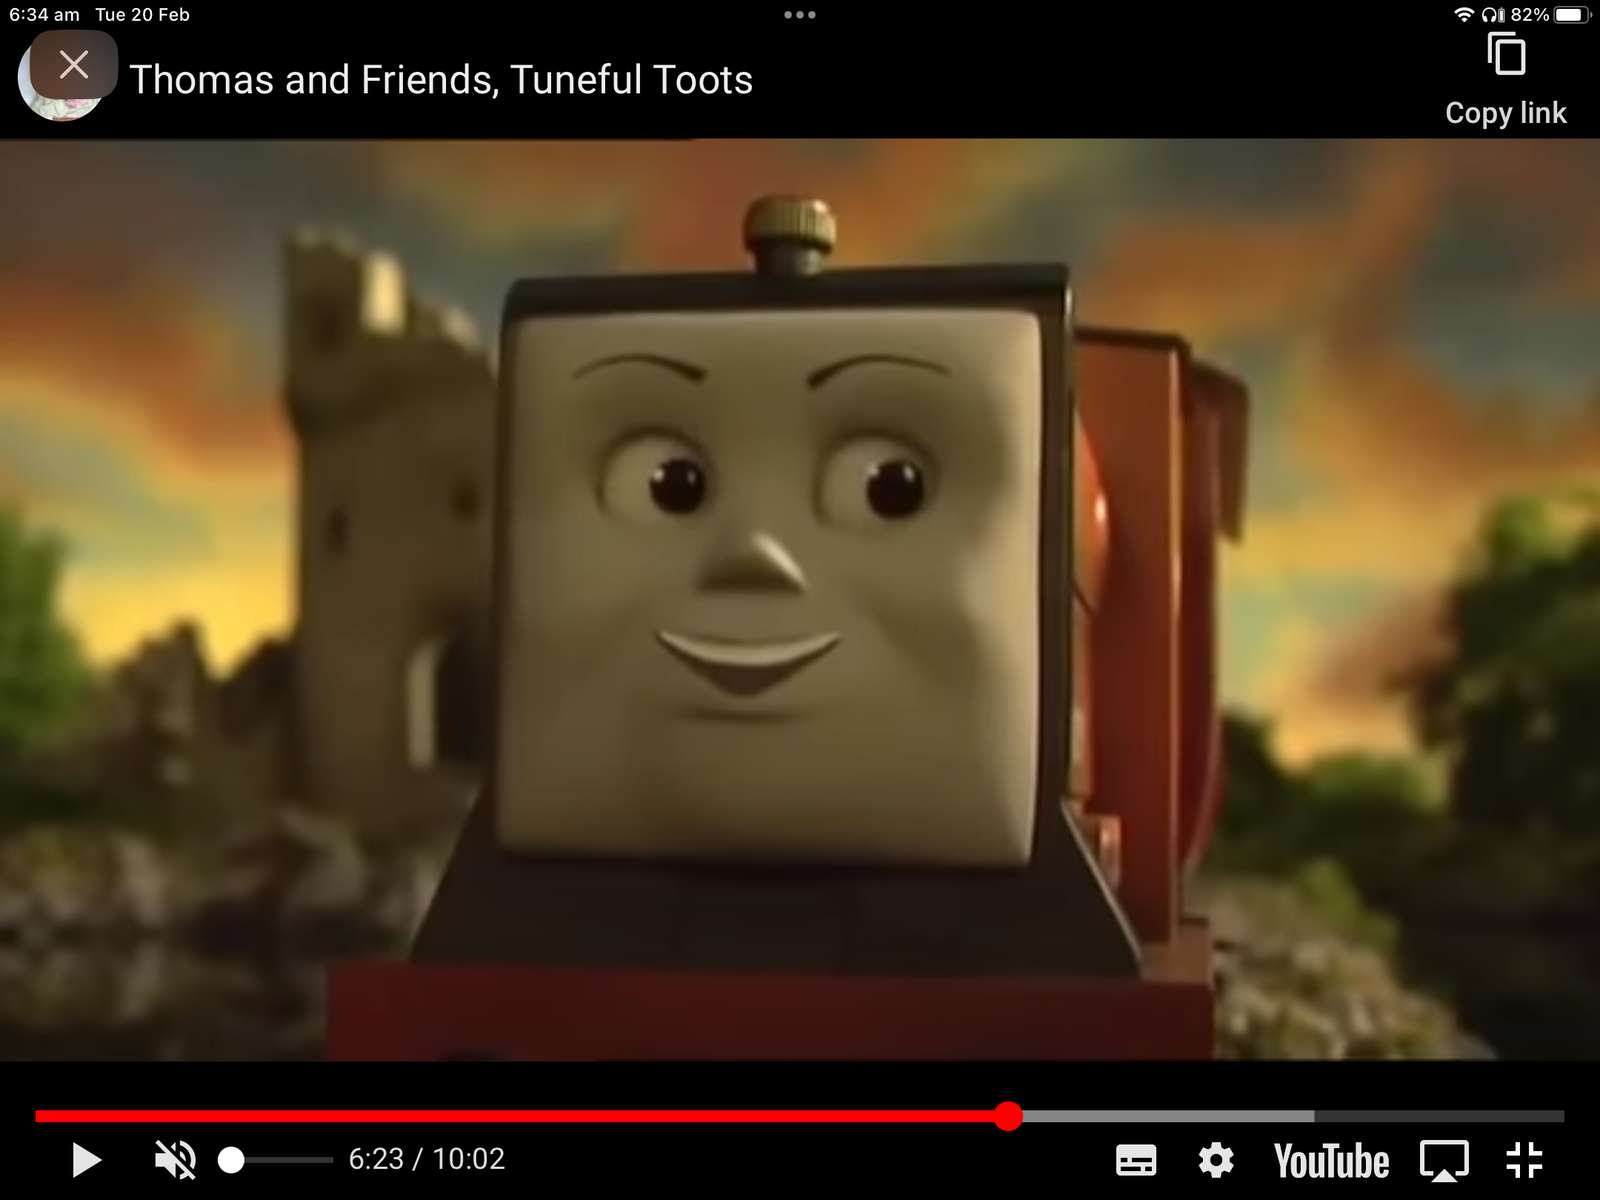 Thomas e amigos toots melodiosos puzzle online a partir de fotografia